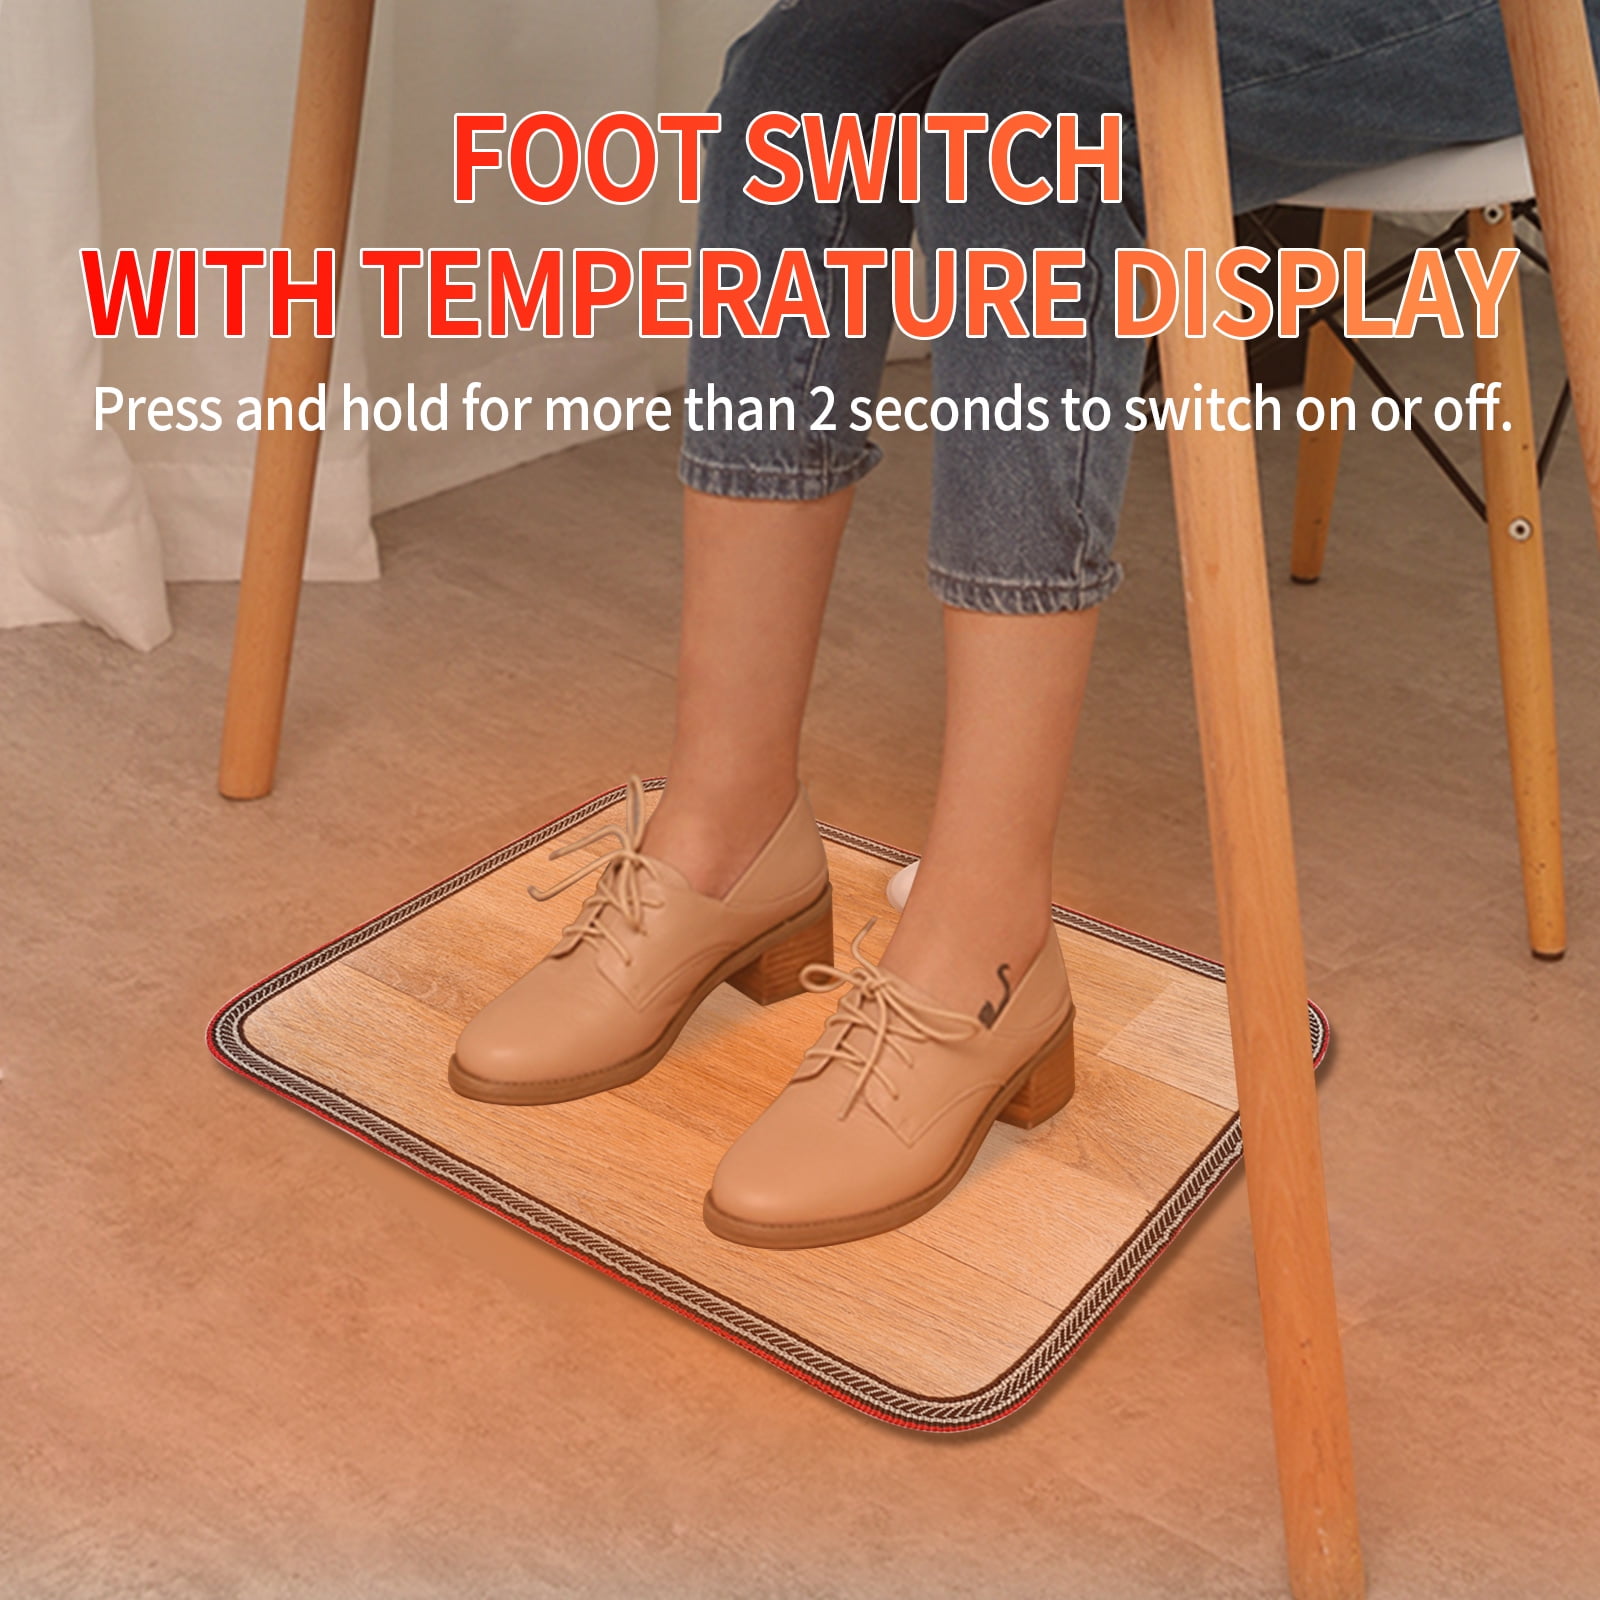 Foot Warmer Mat For Under Your Desk